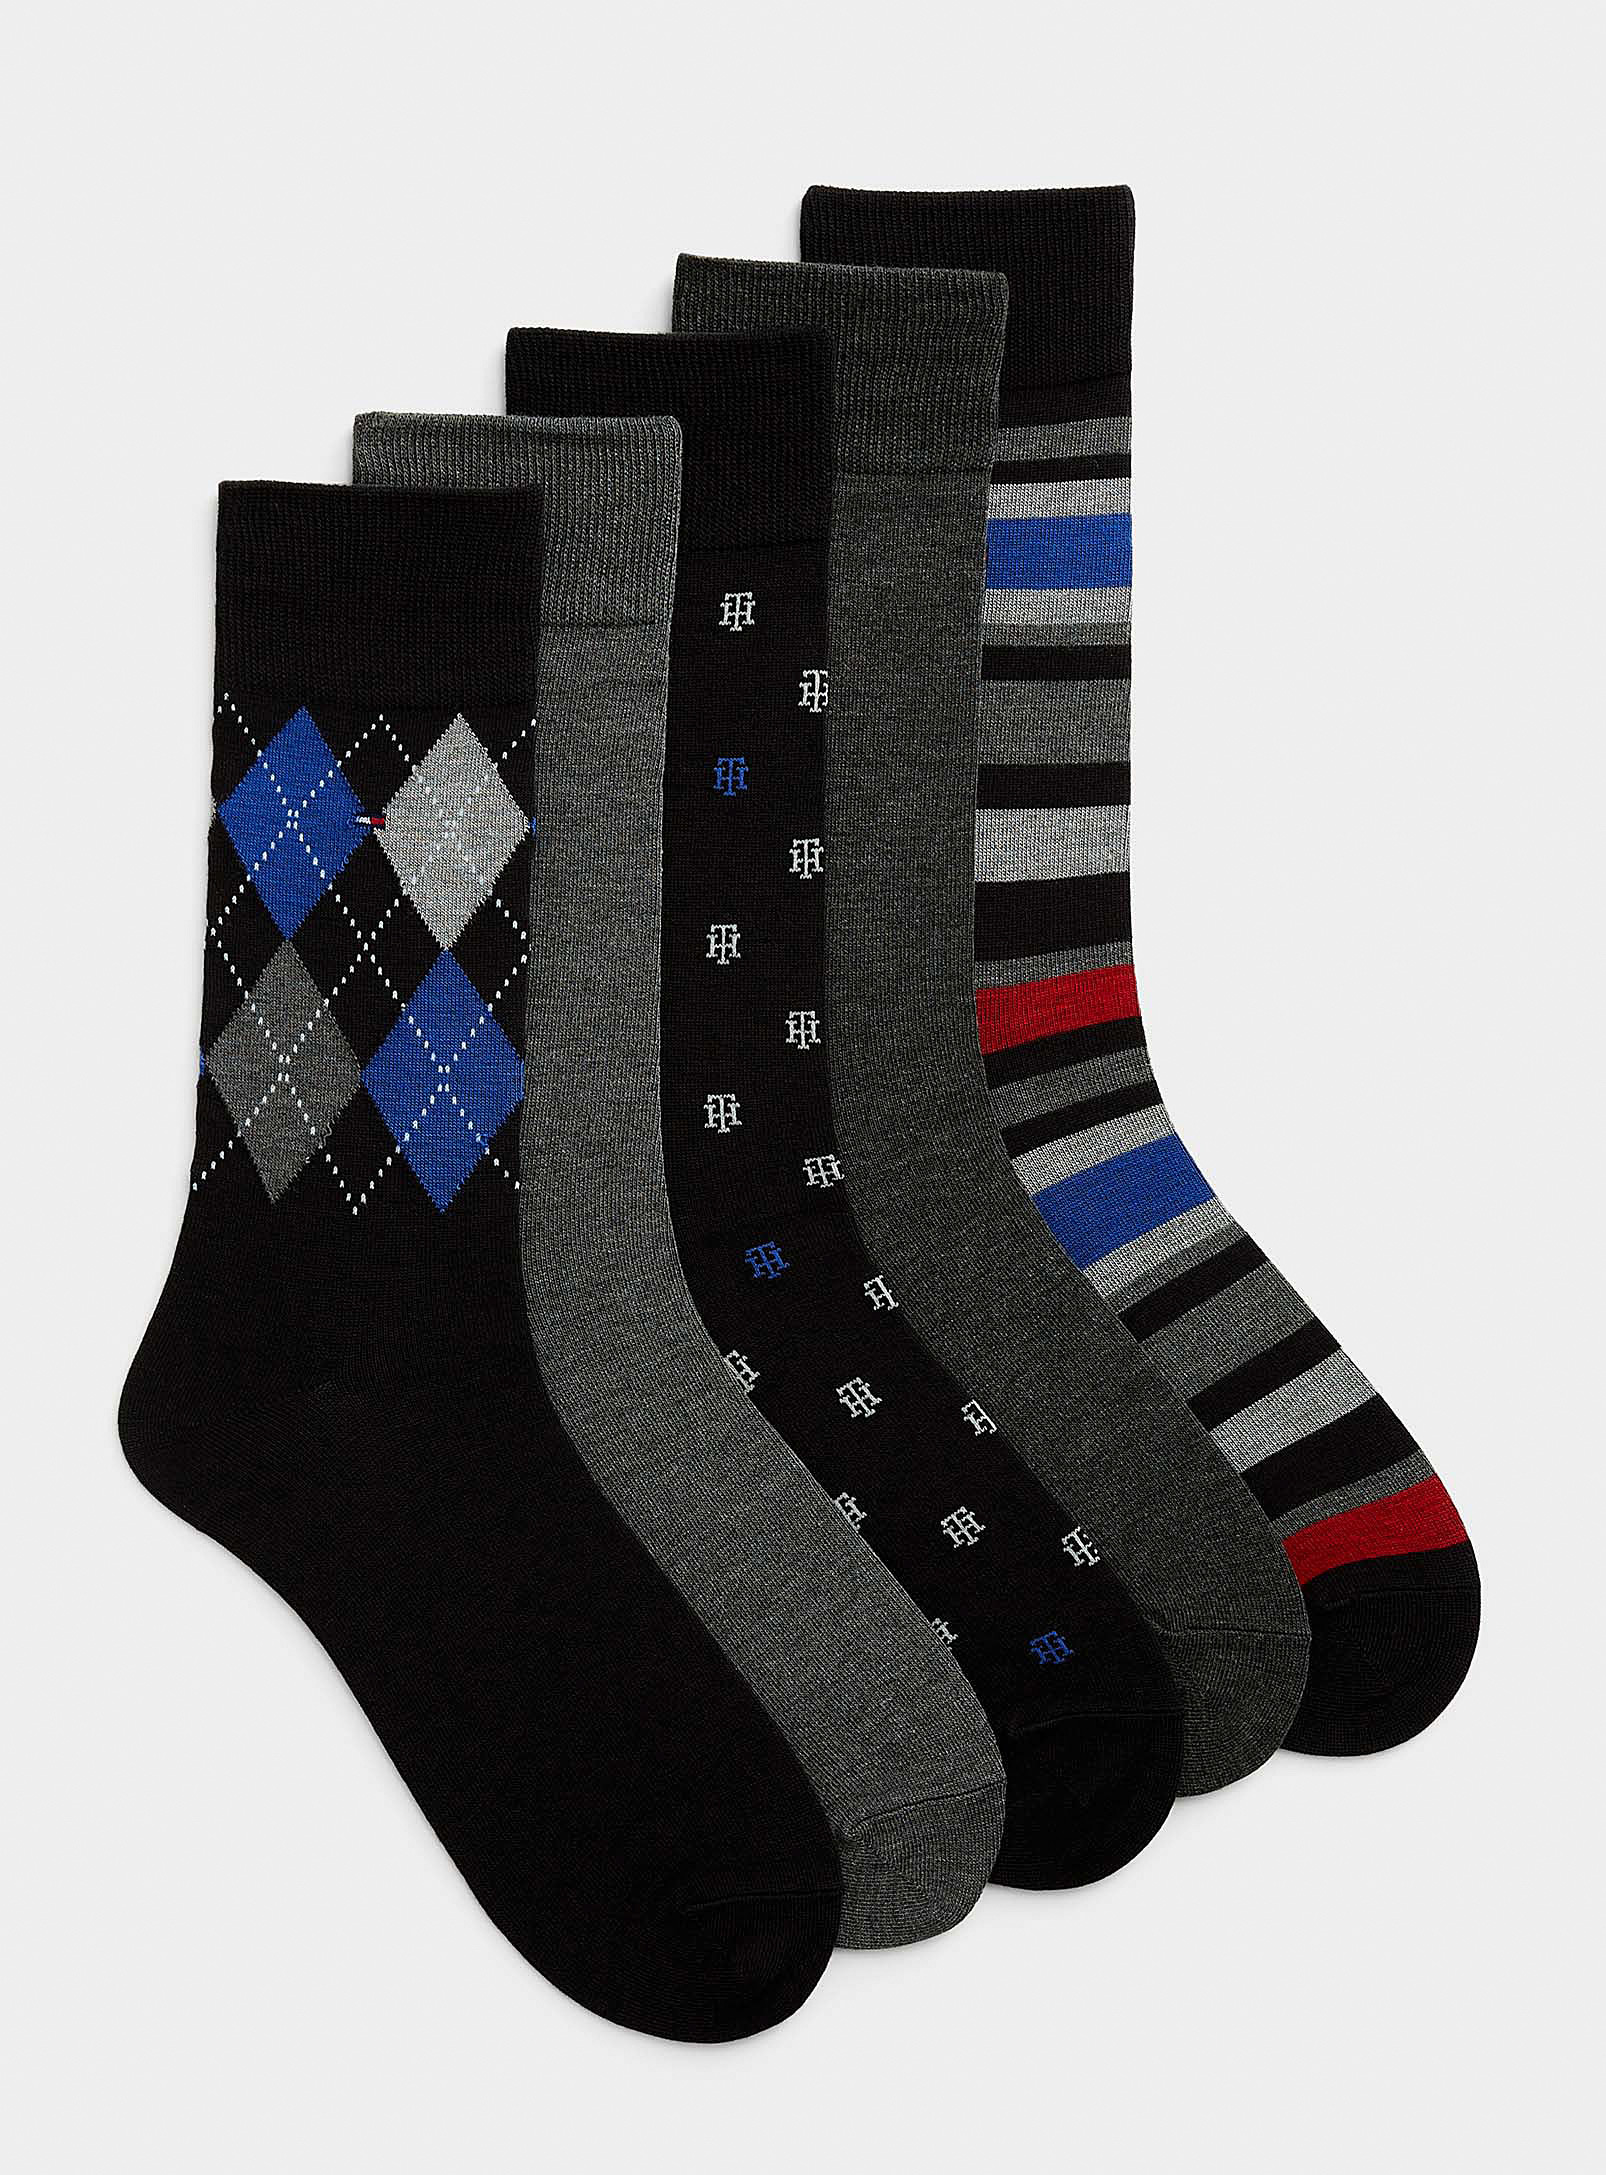 Tommy Hilfiger Solid And Patterned Dress Socks 5-pack In Black